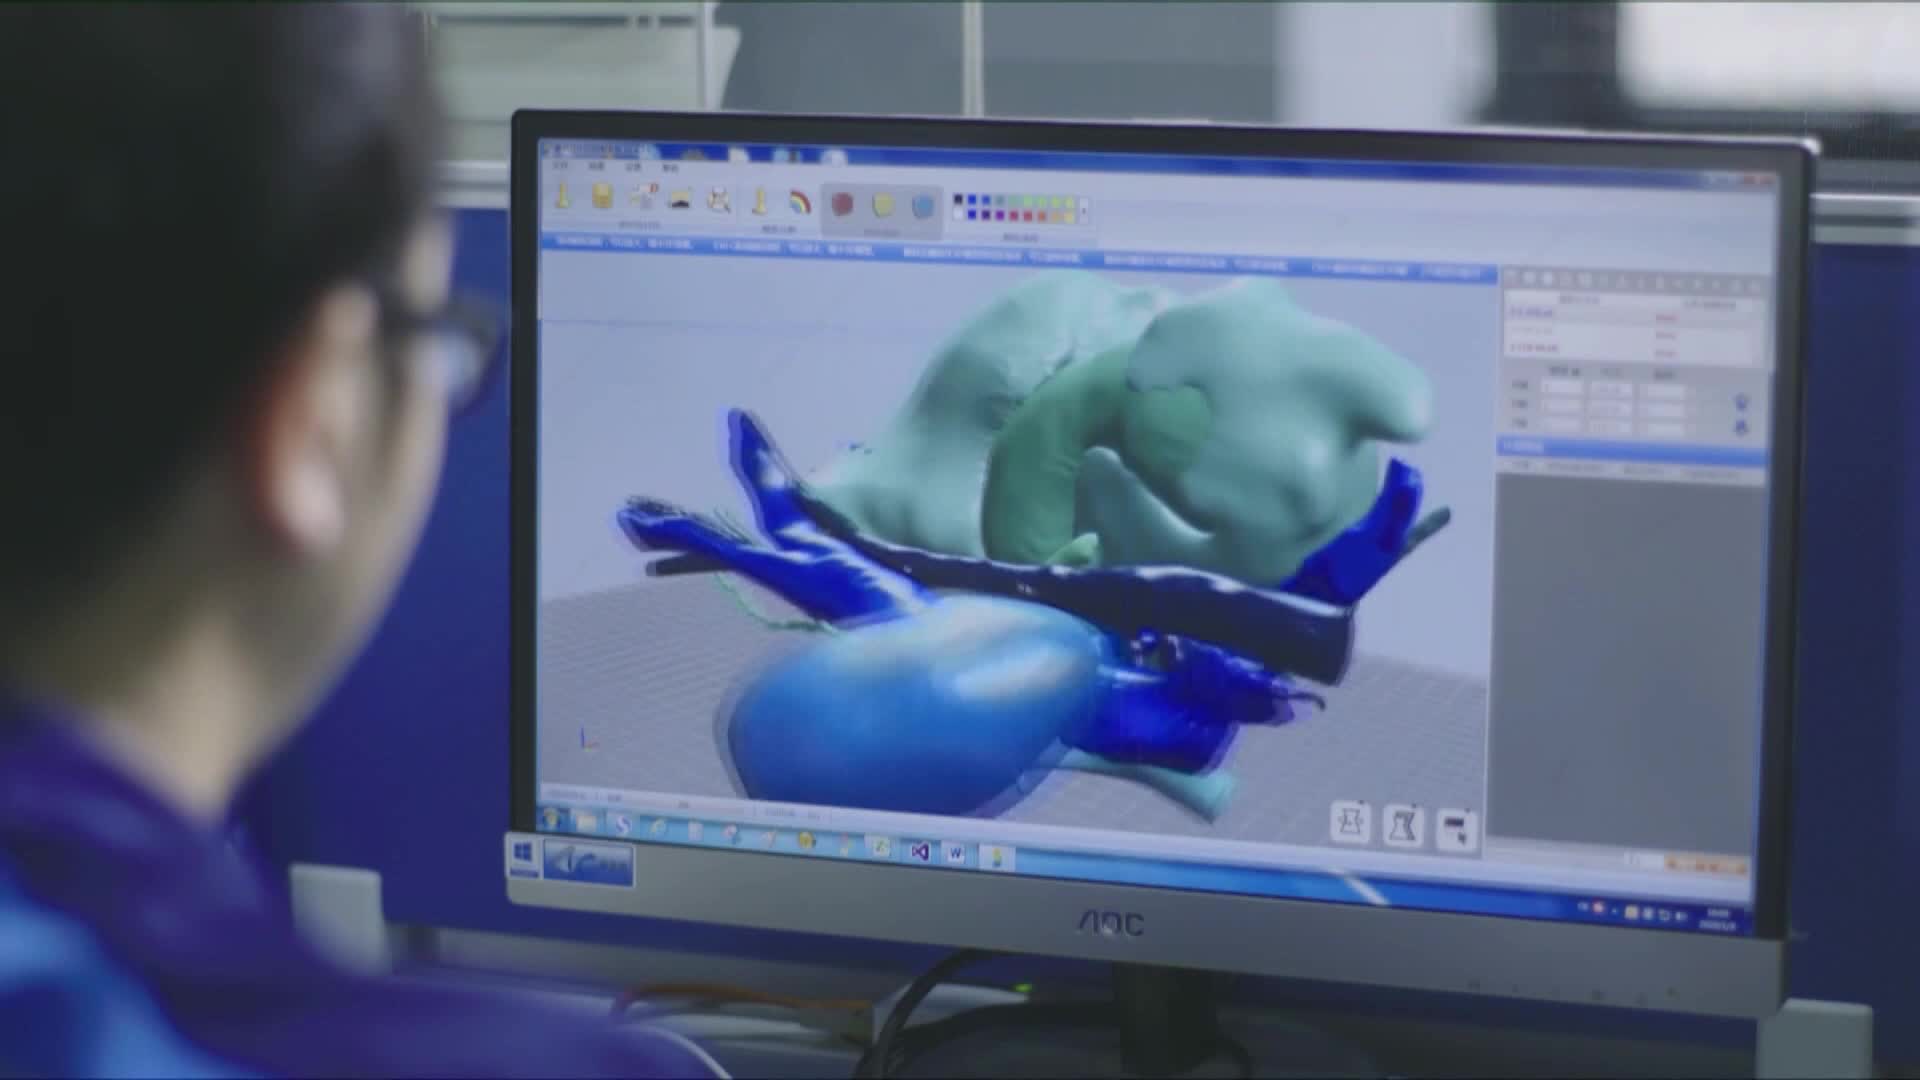 Modelos de órganos humanos impresos en 3D ayudan en formación médica en hospital de Guangzhou, China